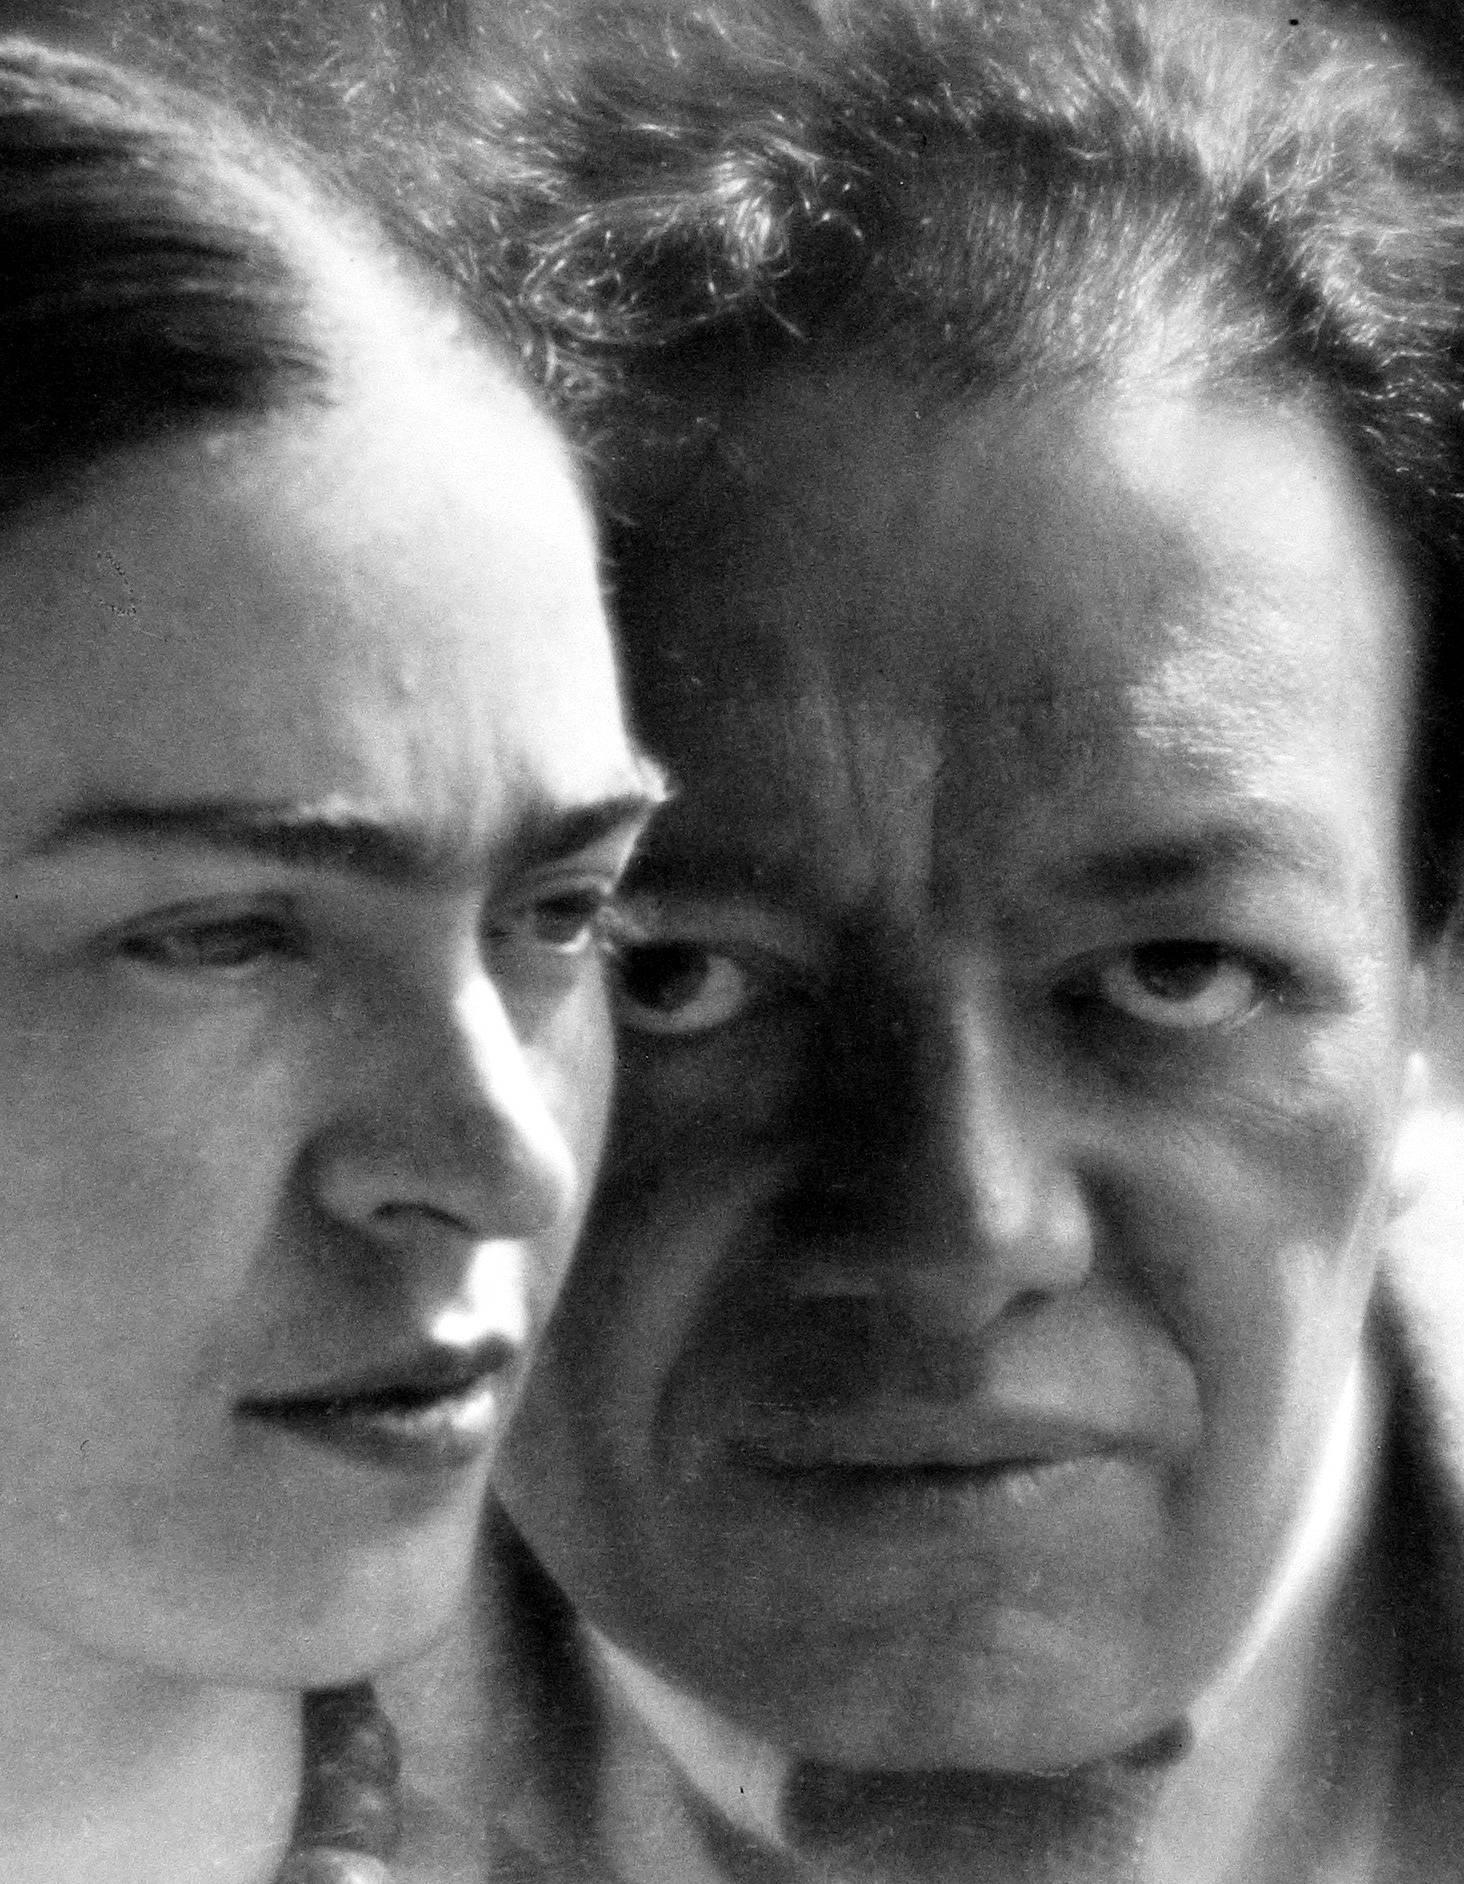 Martin Munkacsi Portrait Photograph - Frida Kahlo and Diego Rivera, Mexico